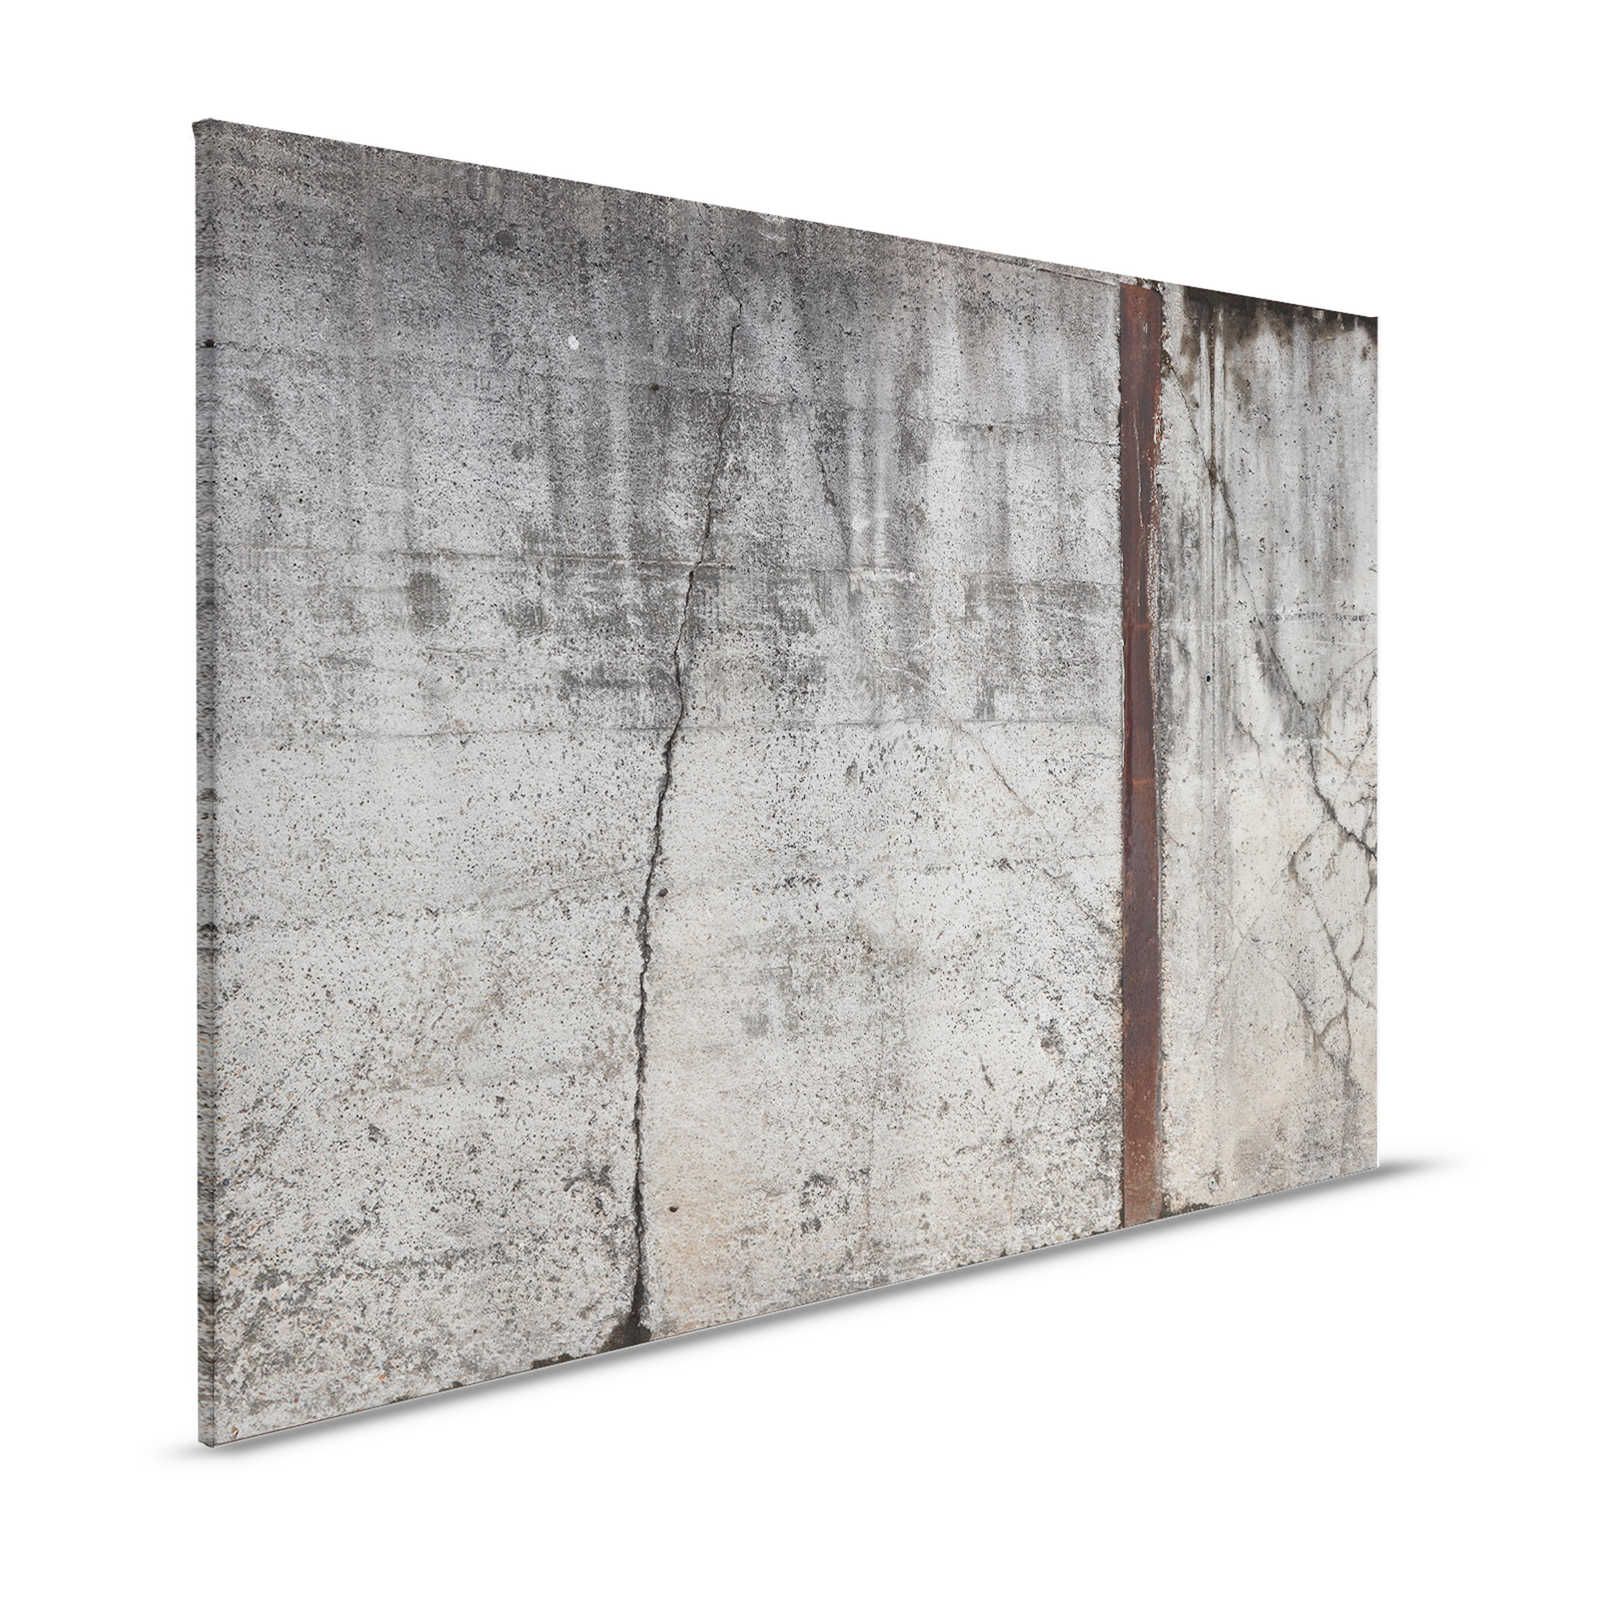 Canvas painting Concrete Rustic Style Wall Reinforced Concrete - 1.20 m x 0.80 m
